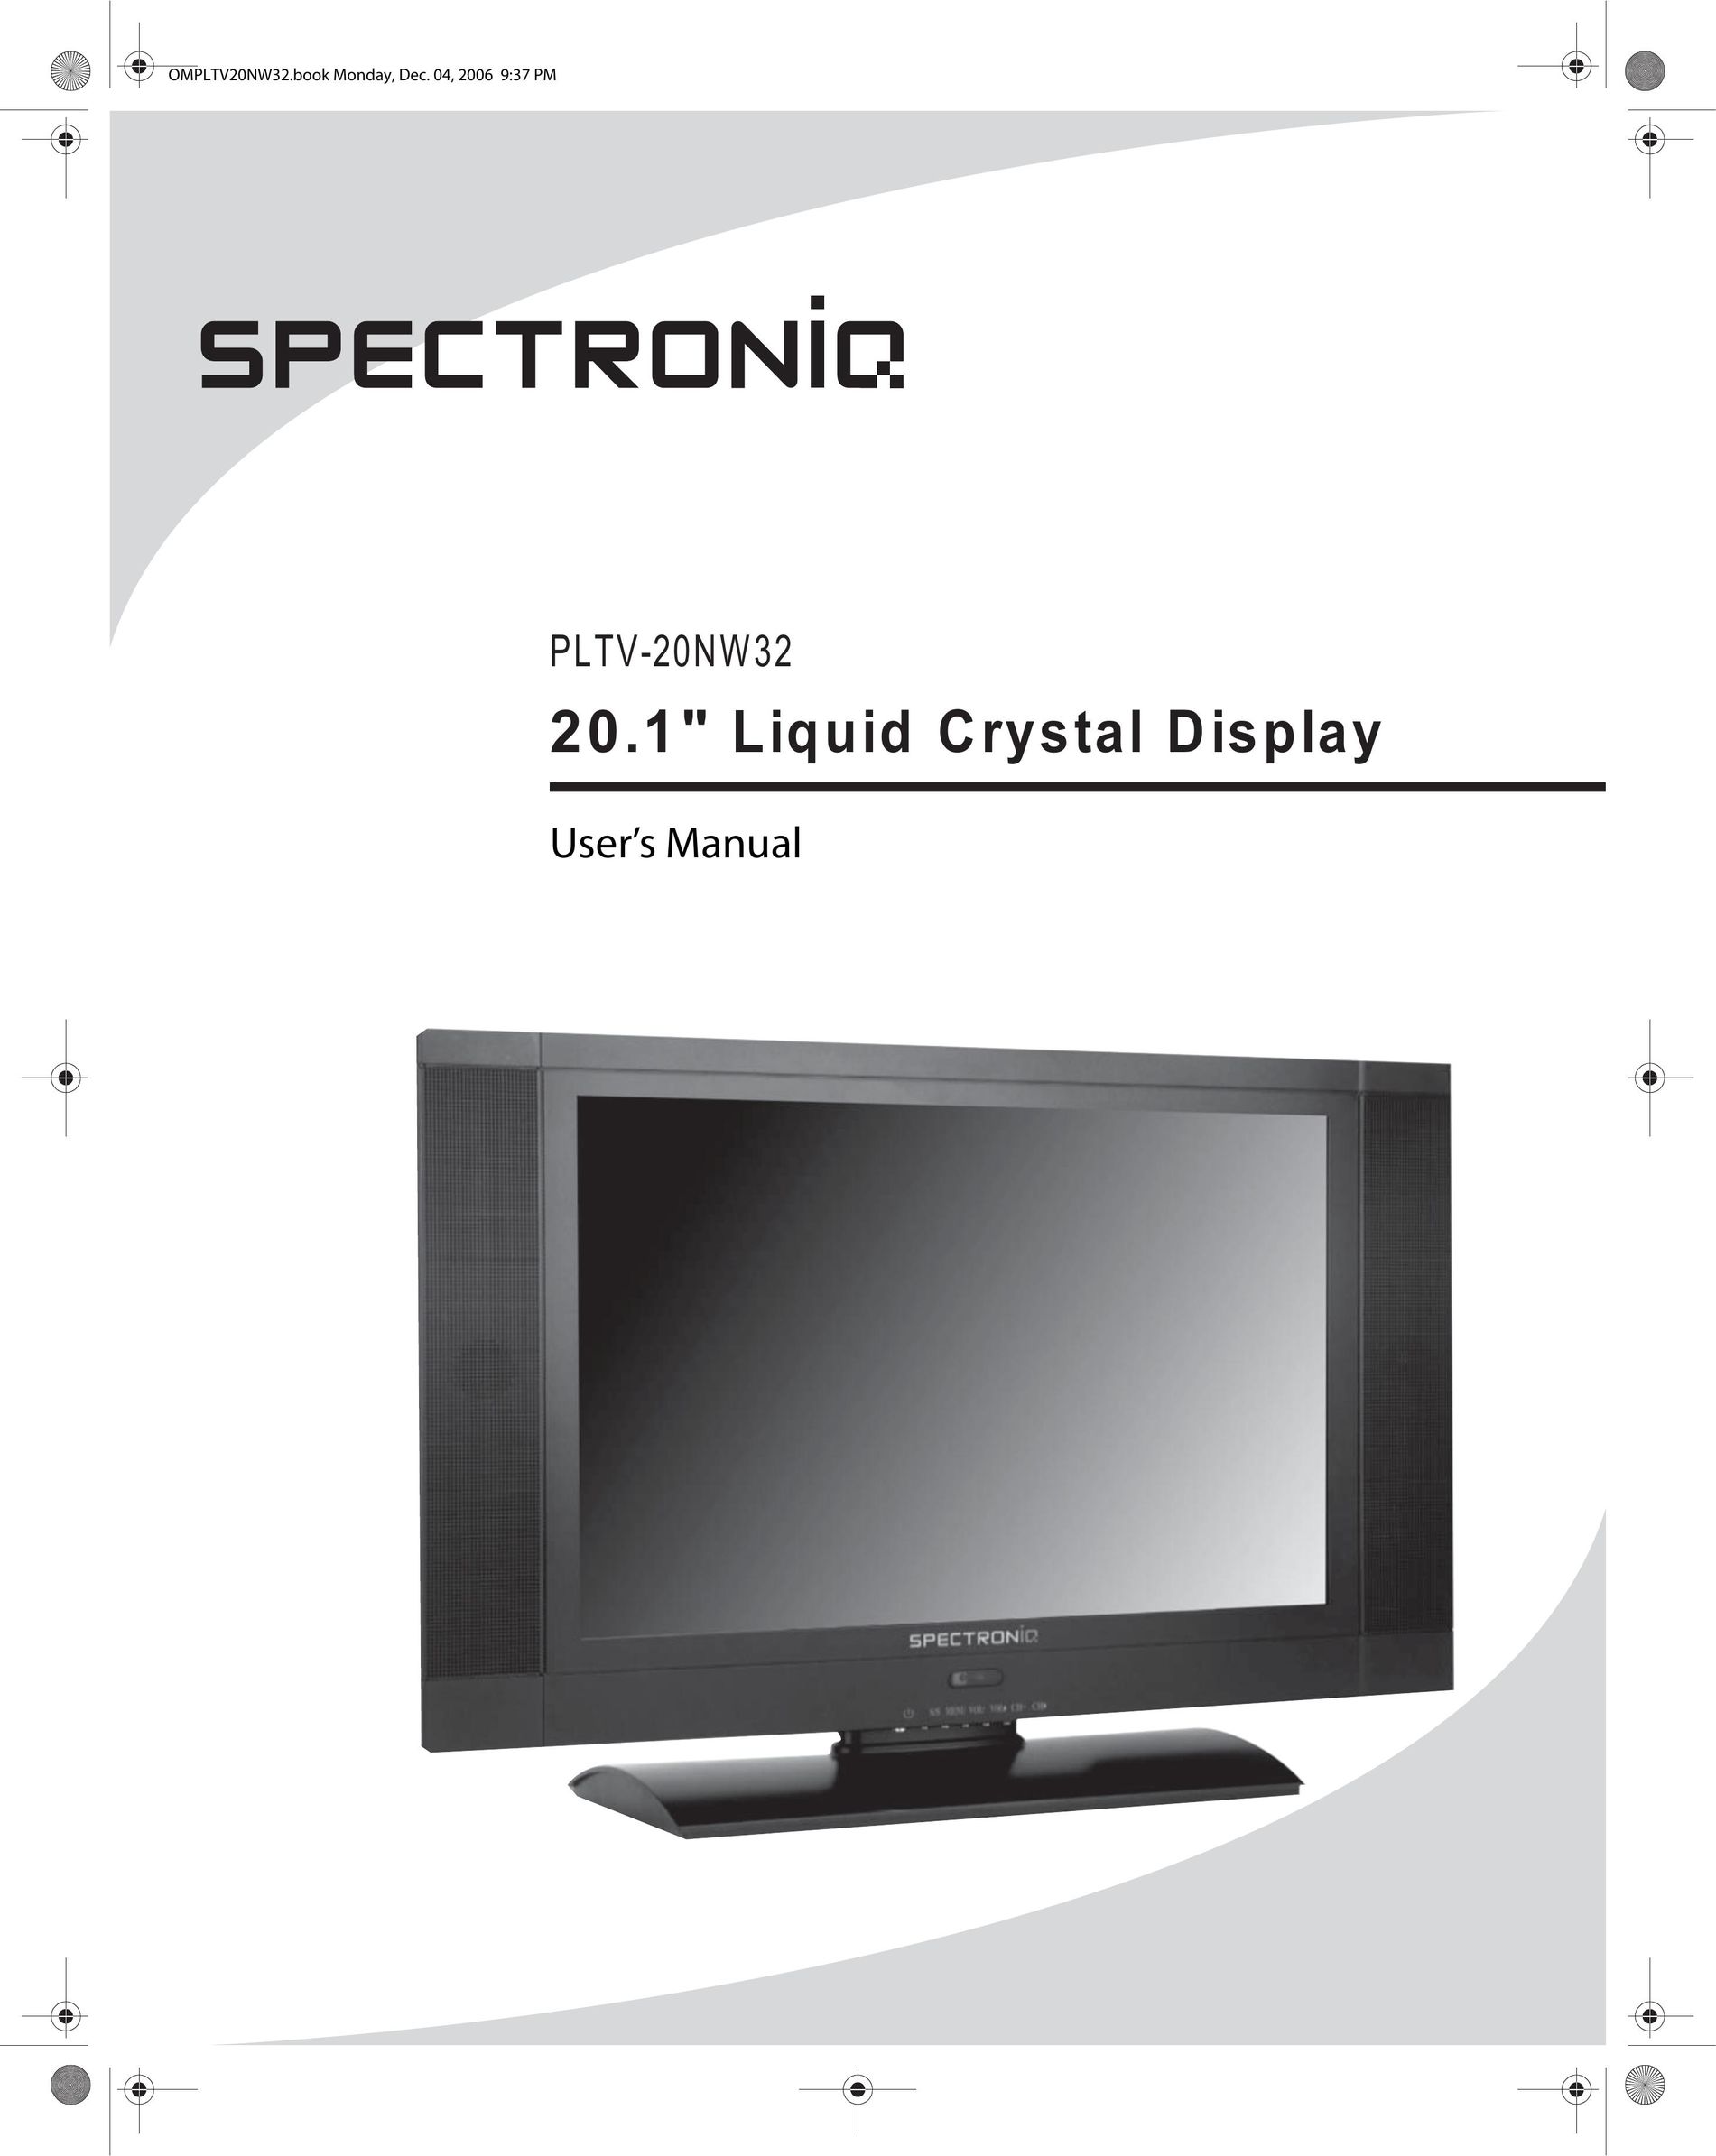 SpectronIQ PLTV-20NW32 Flat Panel Television User Manual